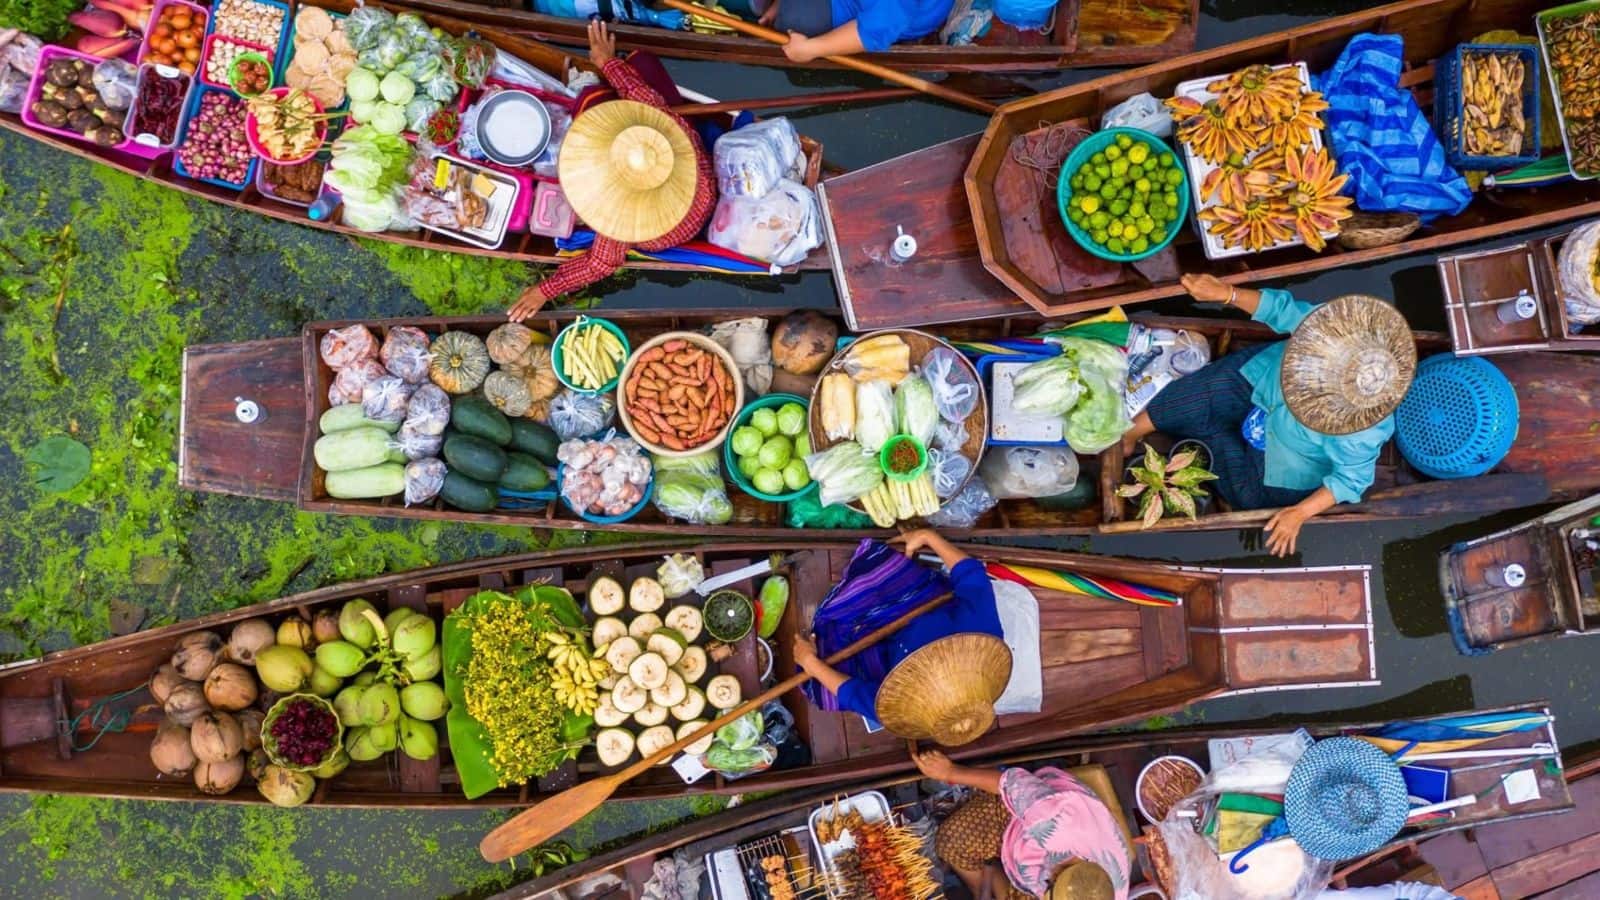 Bangkok's floating market adventure checklist